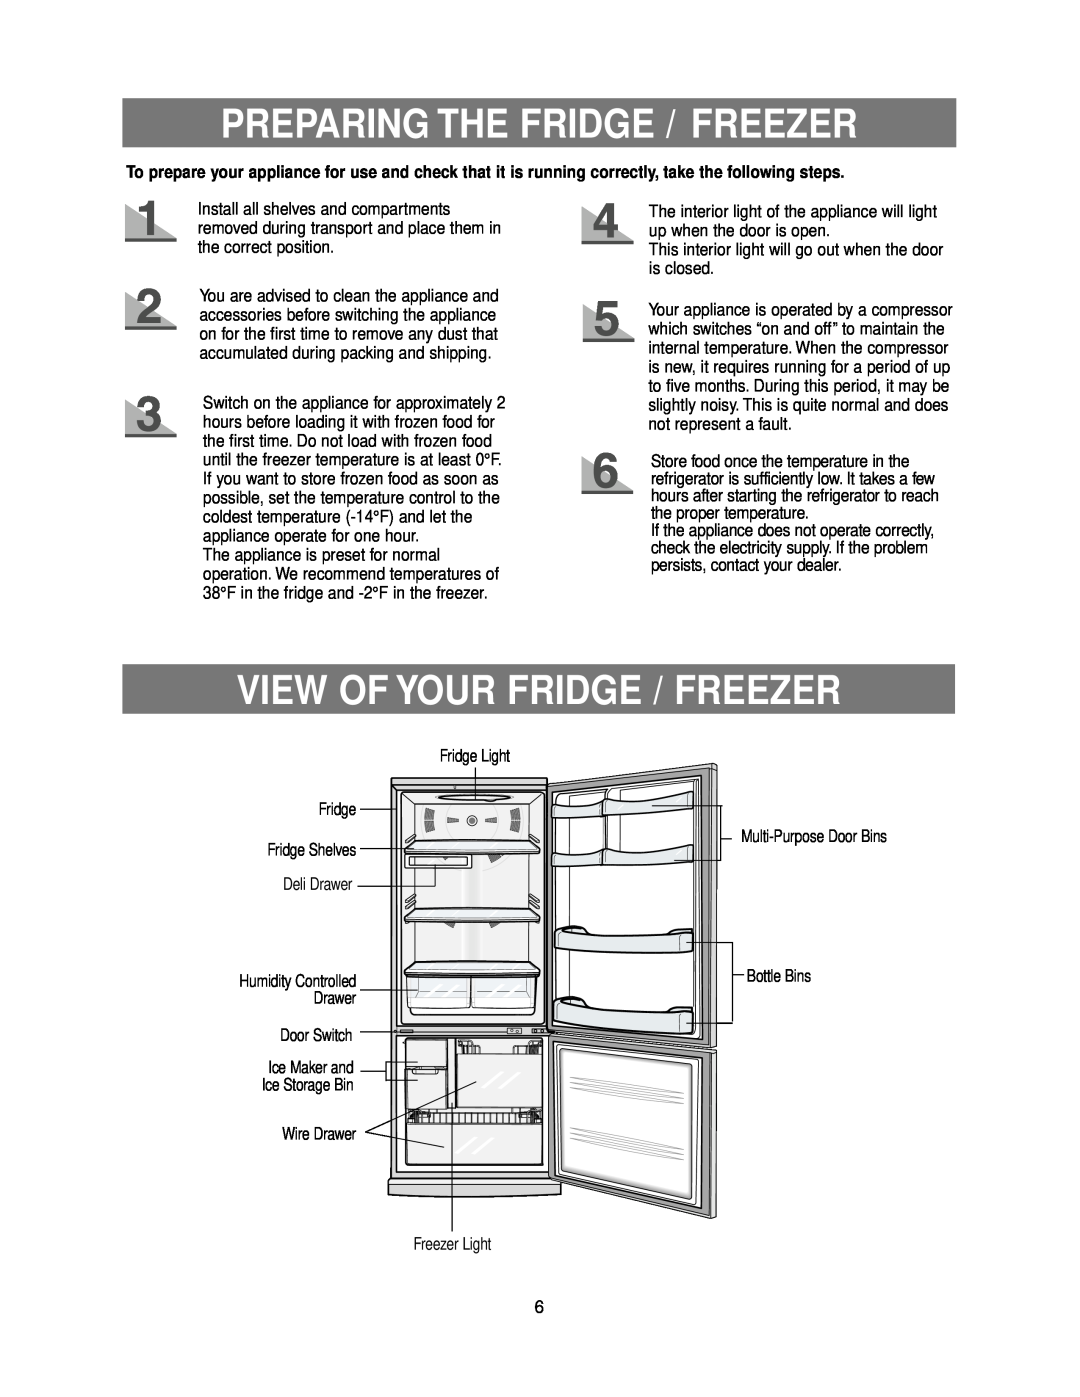 Samsung RB195ZASW Preparing The Fridge / Freezer, View Of Your Fridge / Freezer, Drawer Door Switch, Wire Drawer 